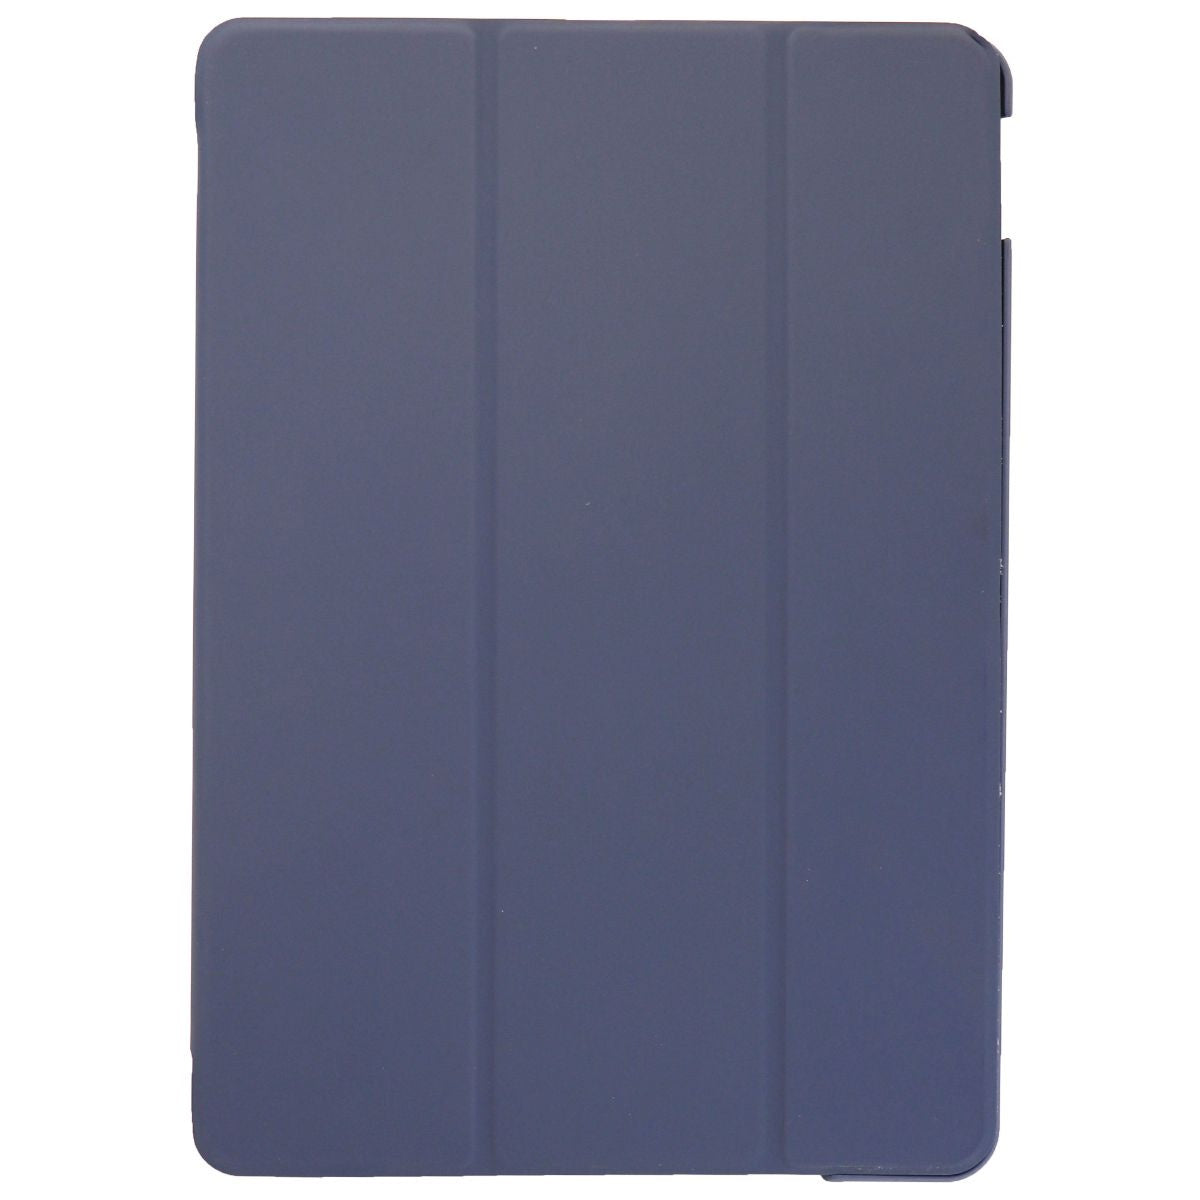 Verizon Slim Hardshell Folio Case for Apple iPad Pro 10.5 (2017) - Blue iPad/Tablet Accessories - Cases, Covers, Keyboard Folios Verizon    - Simple Cell Bulk Wholesale Pricing - USA Seller